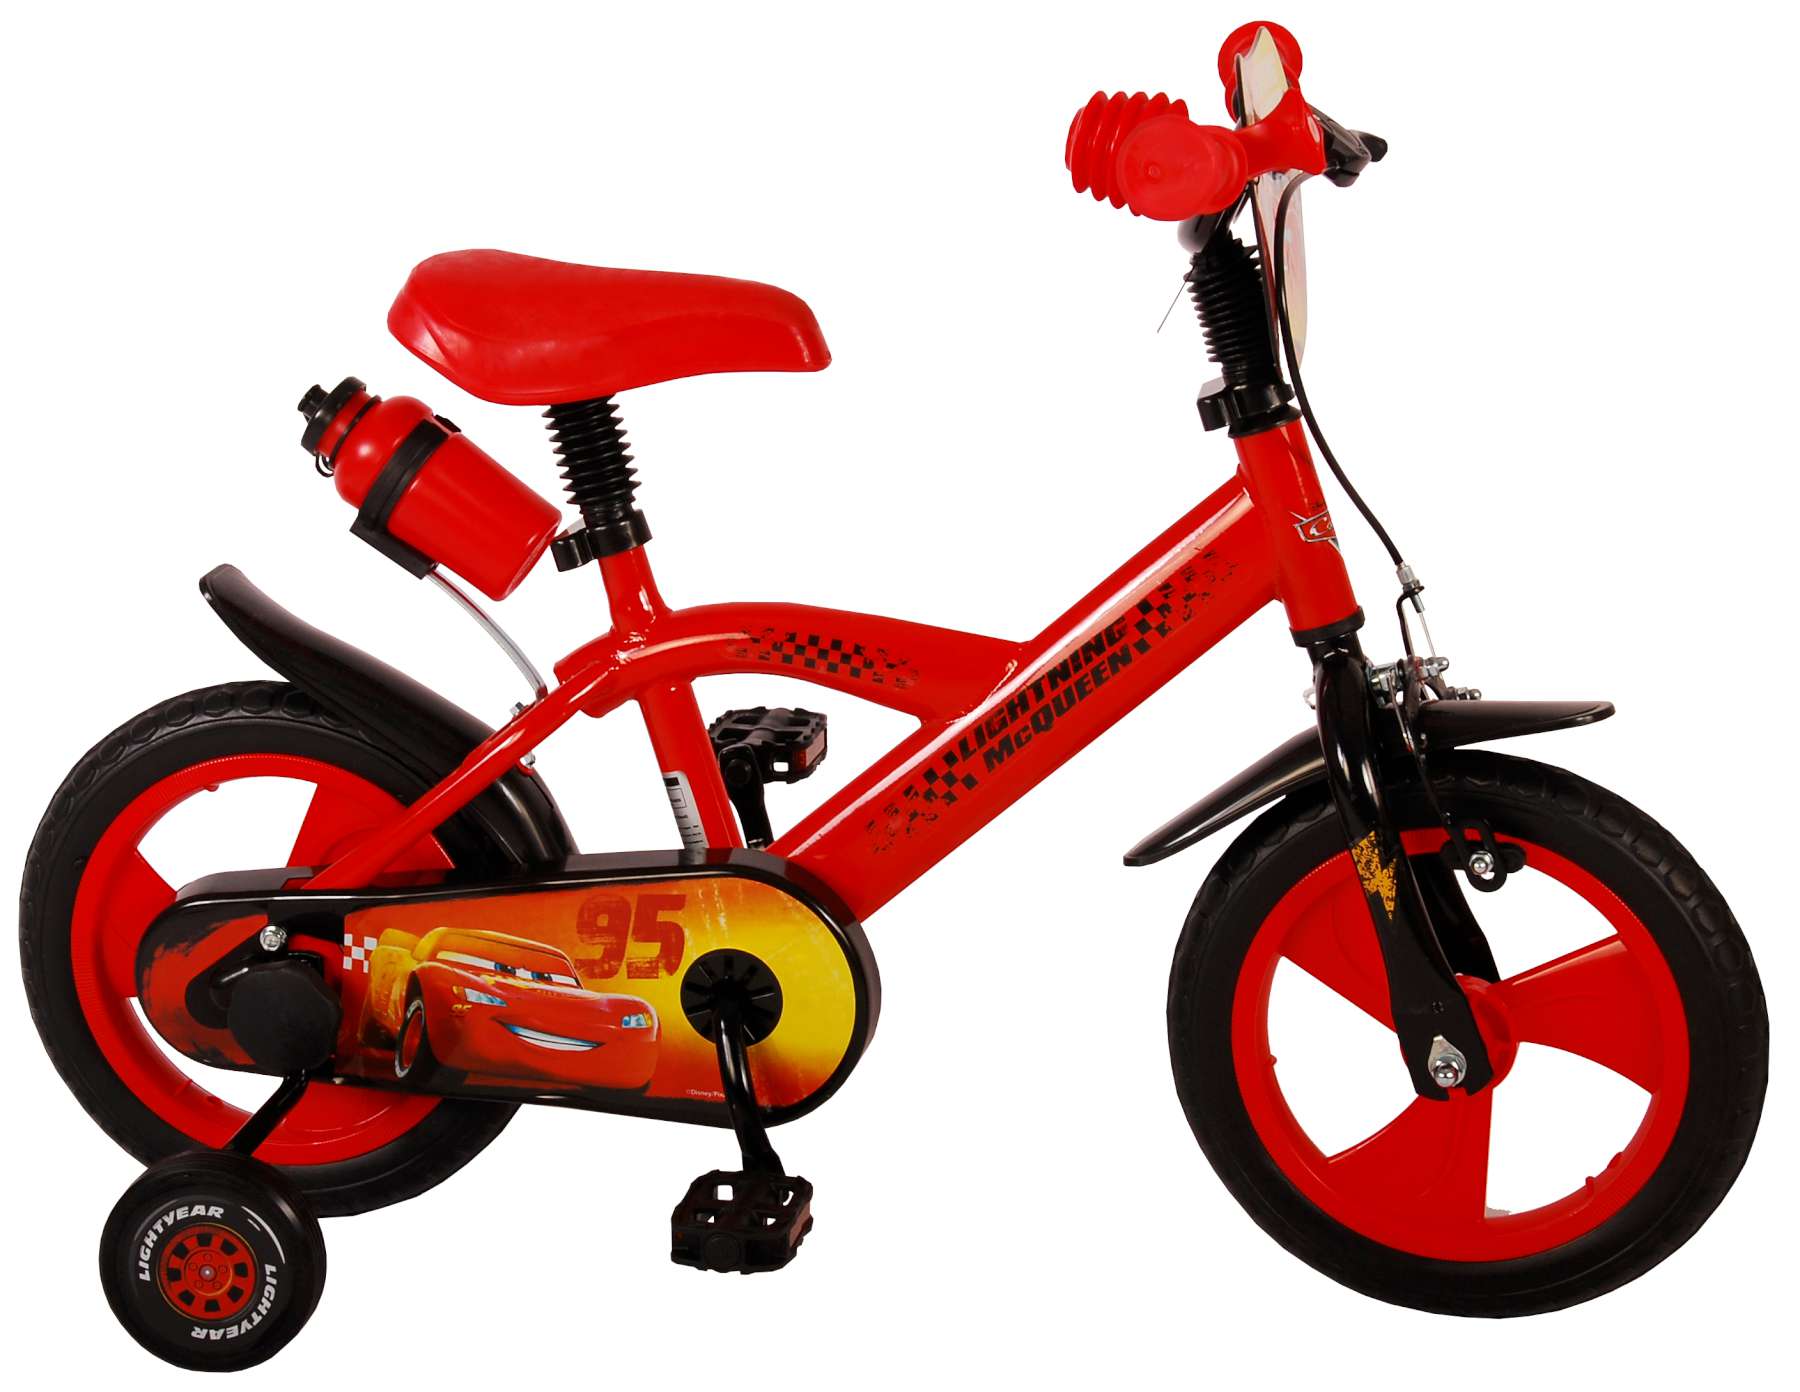 ring elegant Kan niet Disney Cars Children's Bicycle - Boys - 12 inch - Red - Reverse pedal system